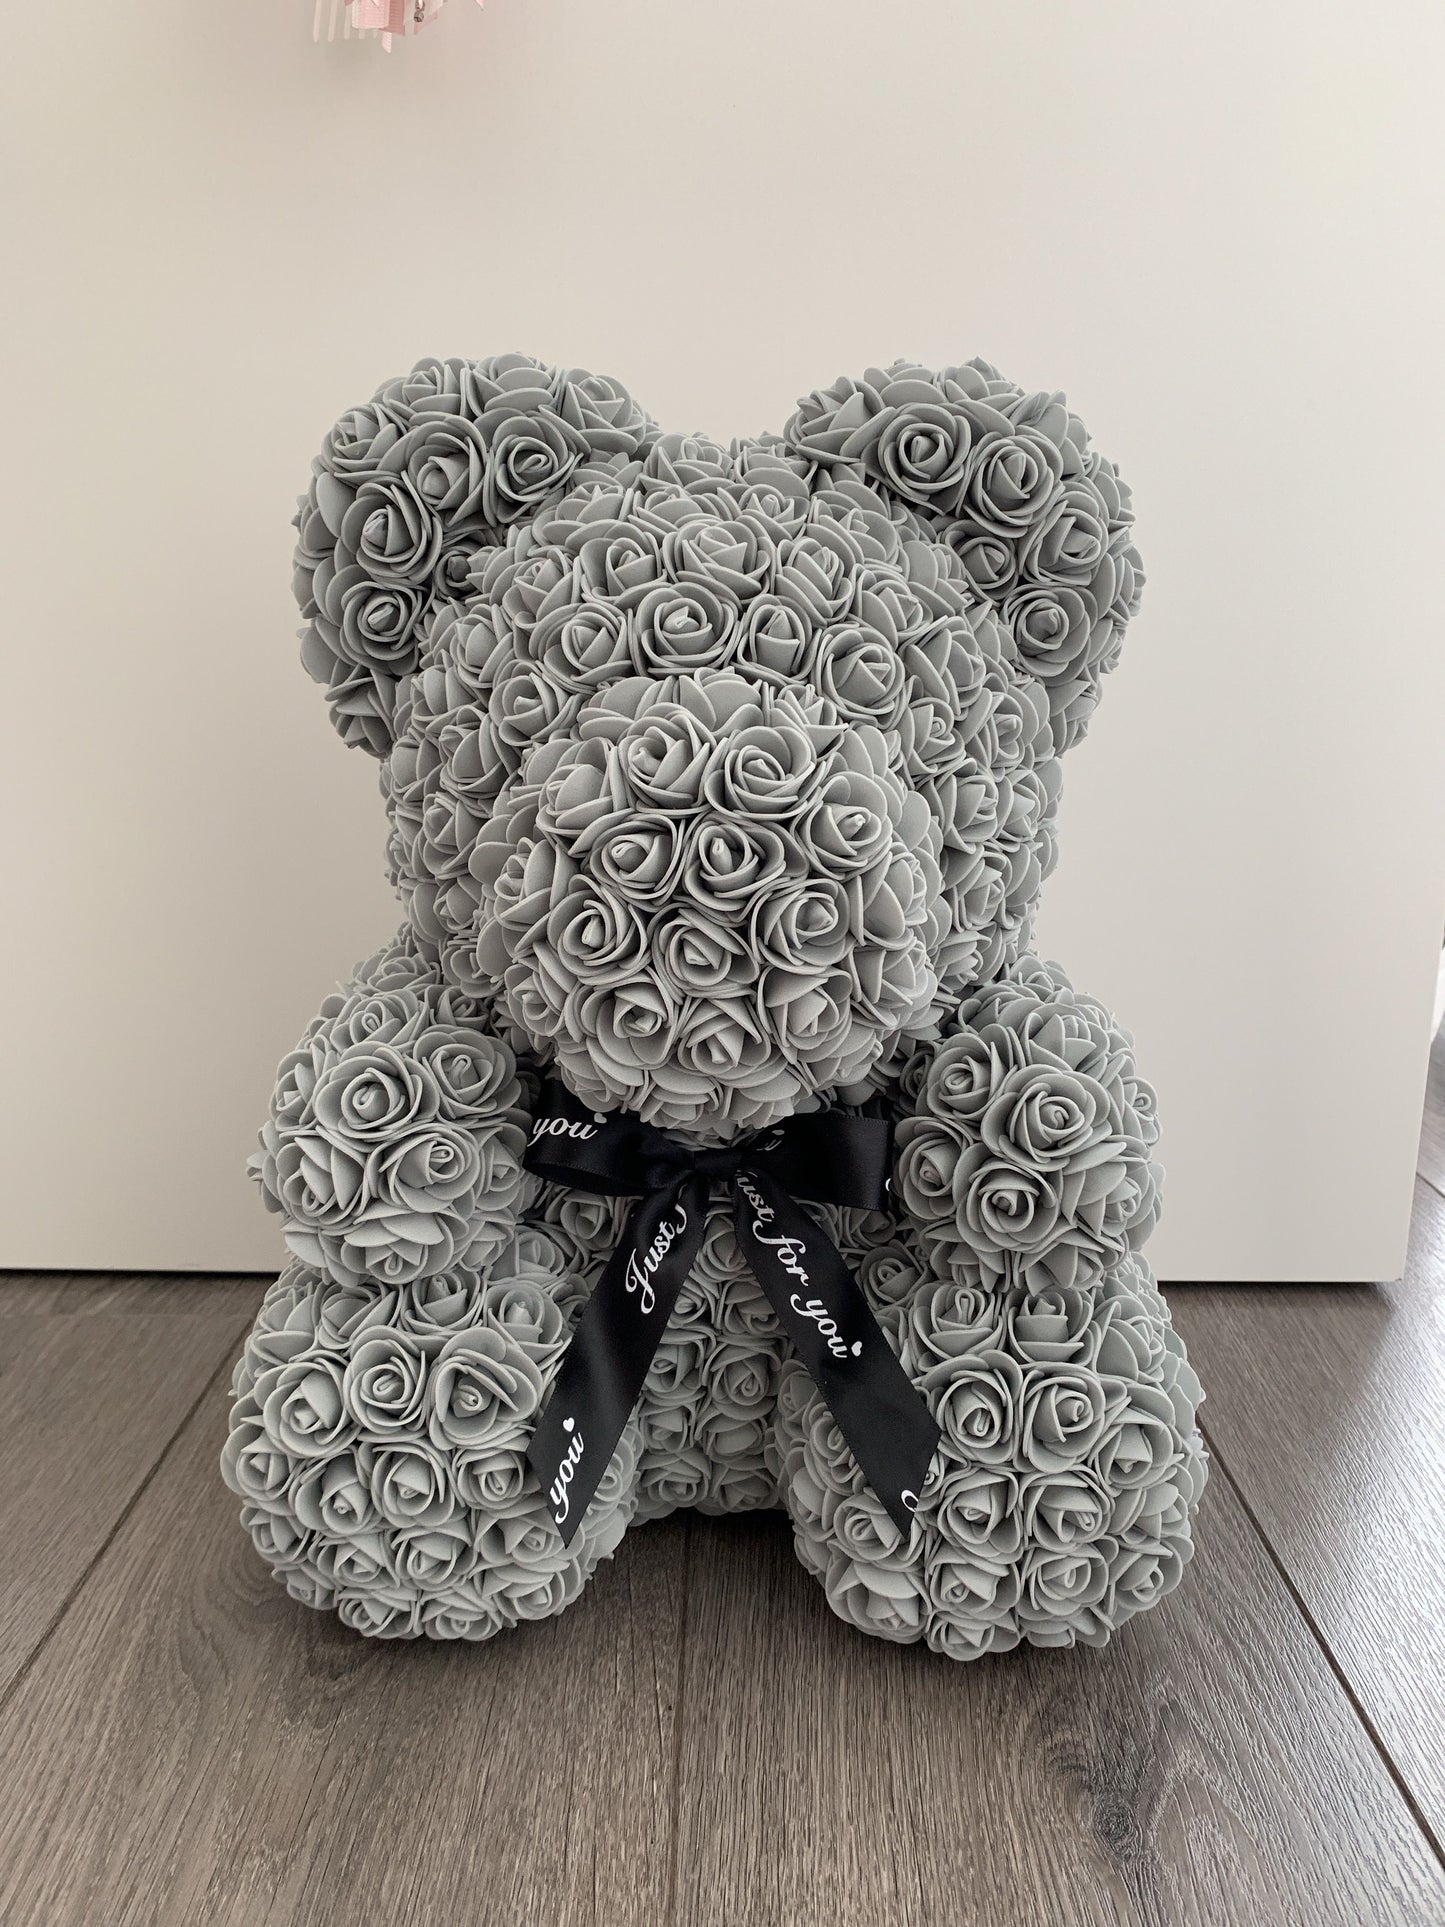 Rose The Grey Bear - 40cm